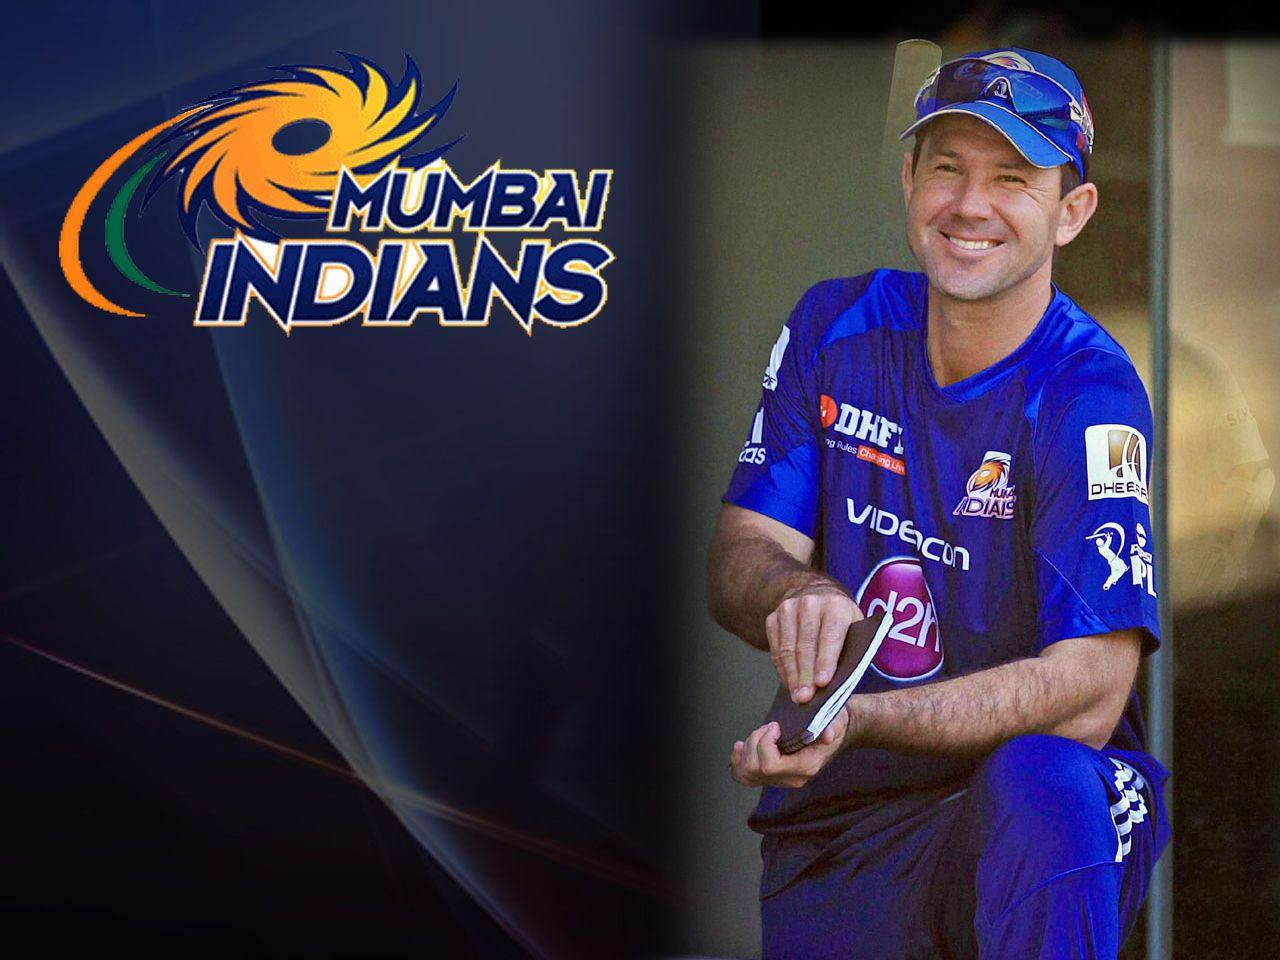 Mumbai Indians Wallpaper Live Scores, Cricket News